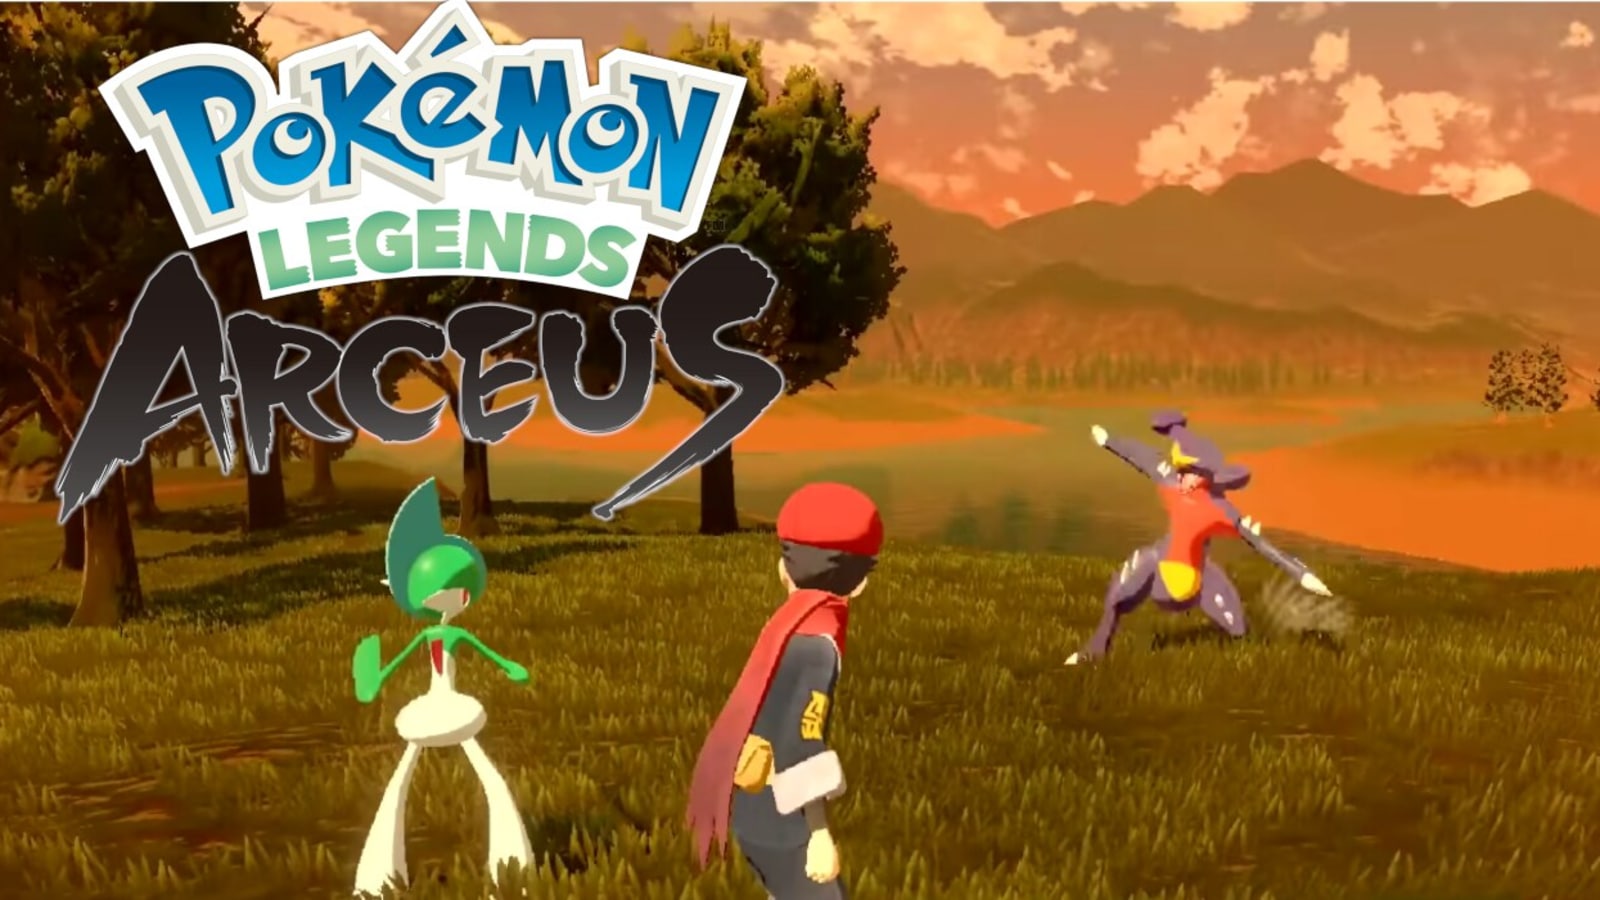 Pokemon Legends - Arceus - 28th Jan 2022 *Official Content Only